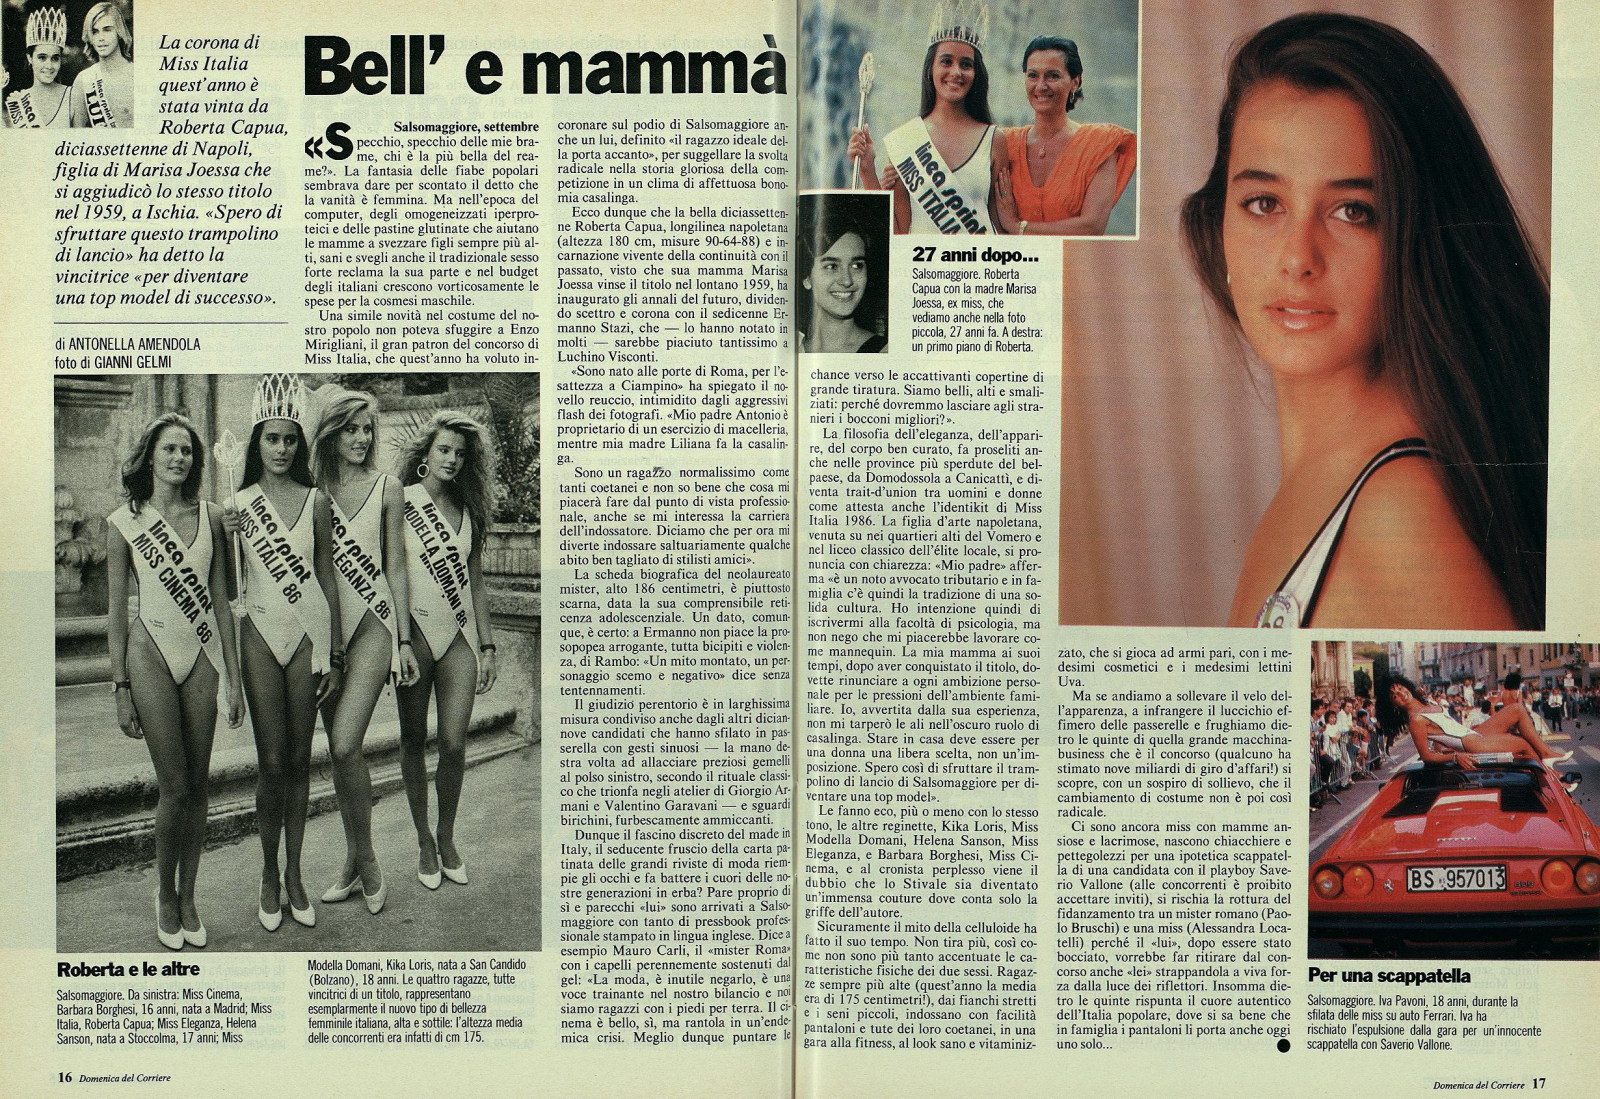 Roberta Capua (Miss Universe 1987 first runner up) (Italy) 5jxw6v